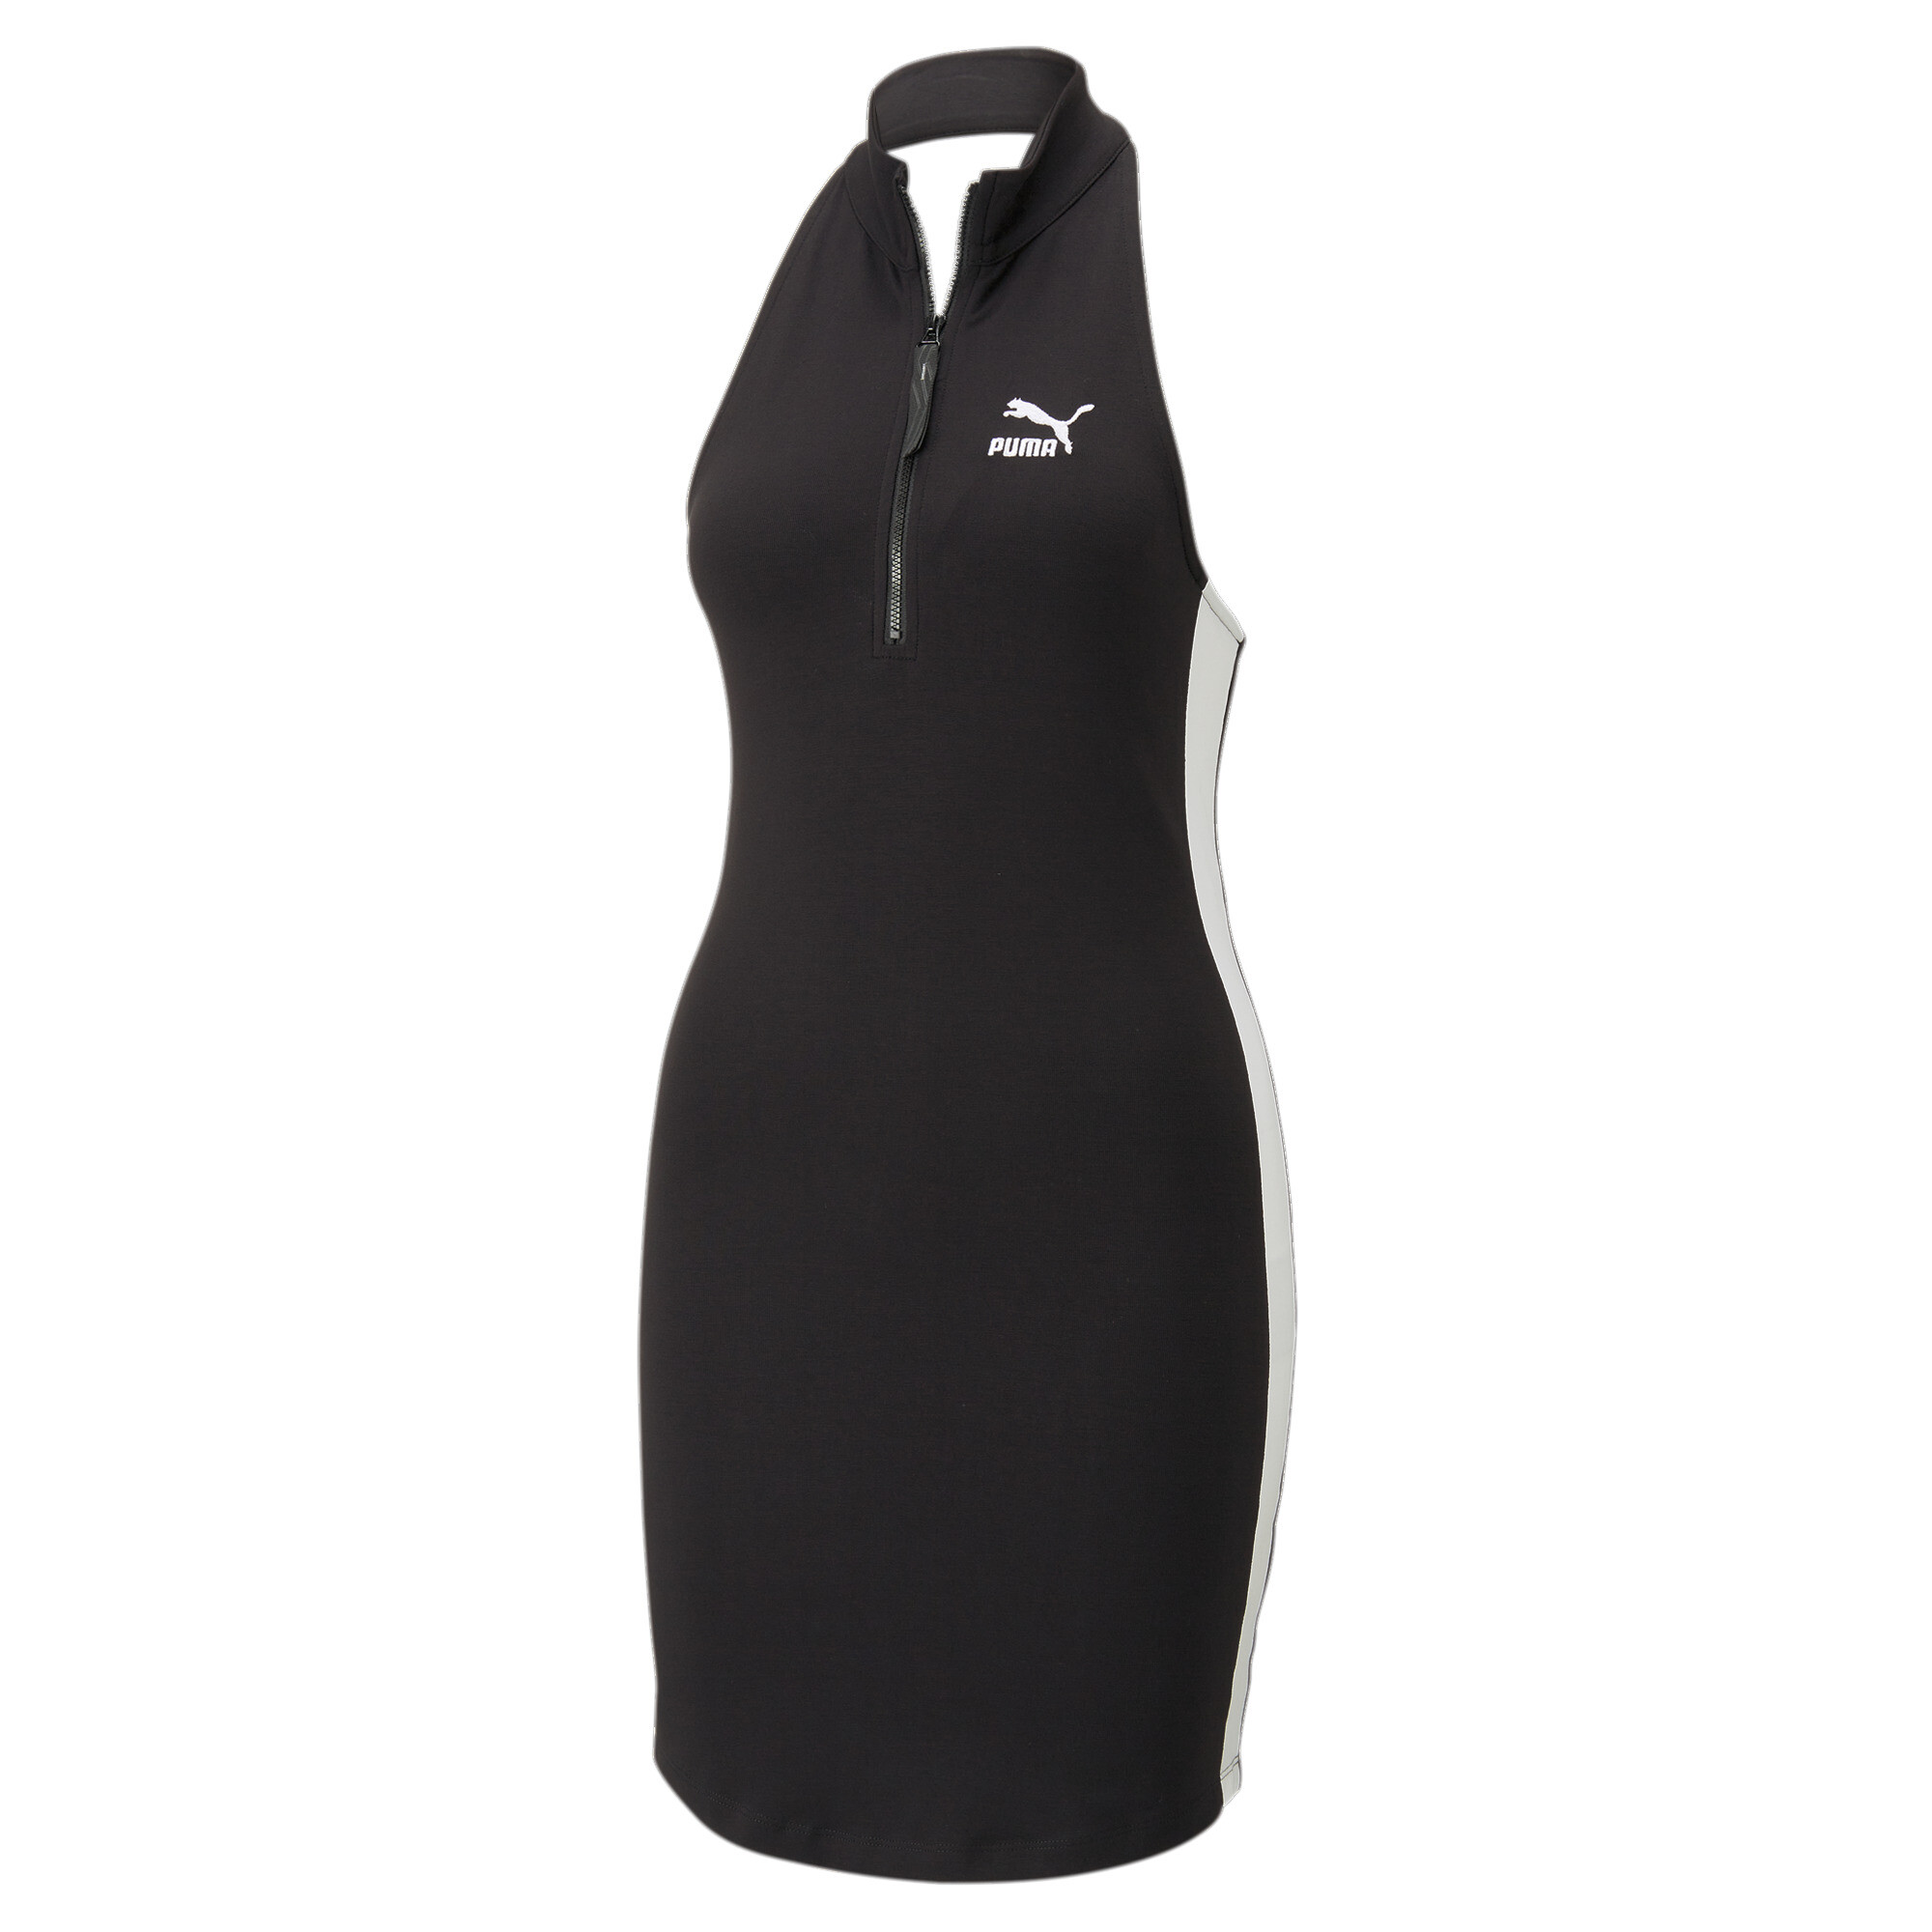 Women's Puma T7 Half-Zip Mock Neck Dress, Black, Size S, Clothing